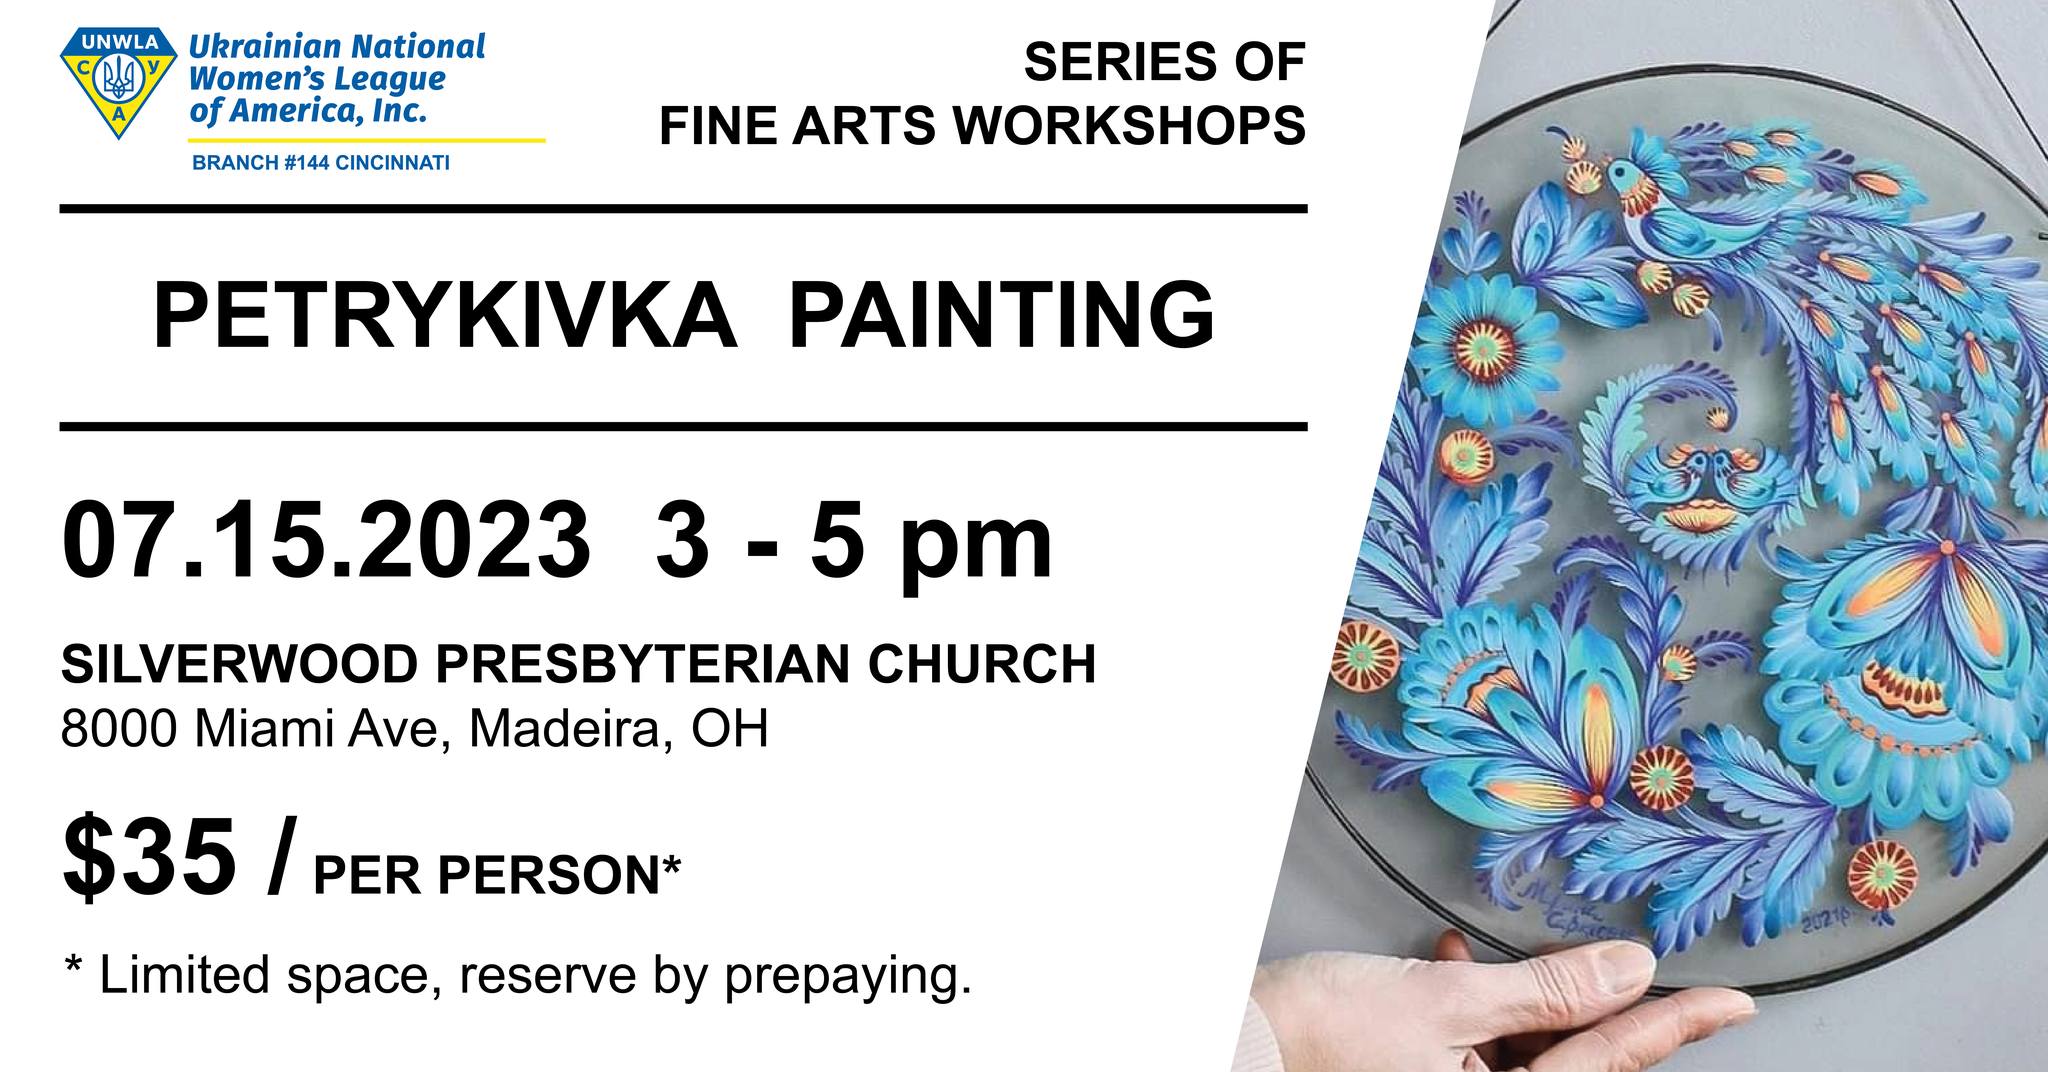 Petrykivka Painting. Ukrainian Painting Workshop | UNWLA - Ukrainian National Womens League of America